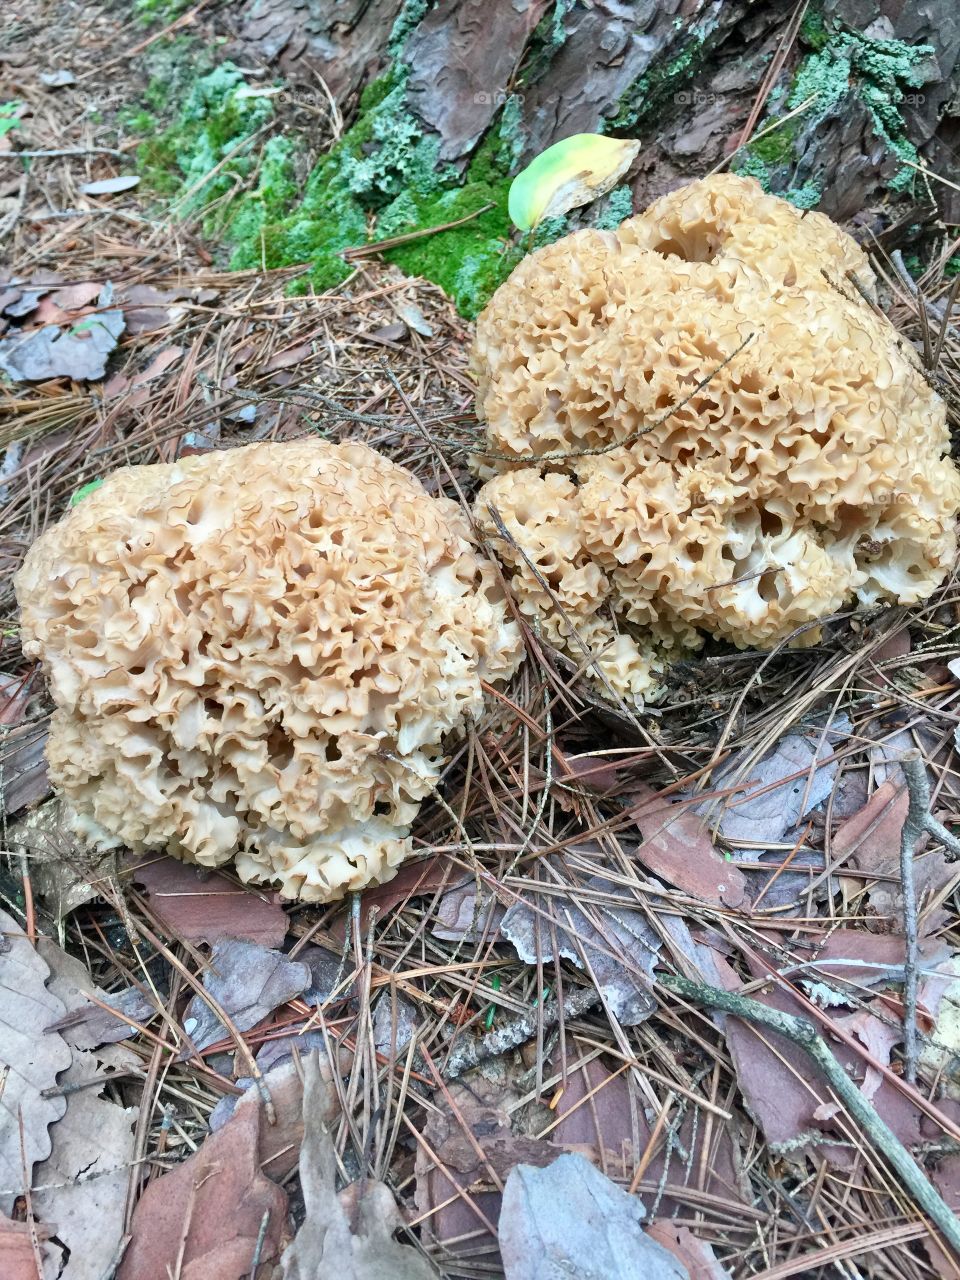 Mature Coral mushrooms after a recent rainfall. 